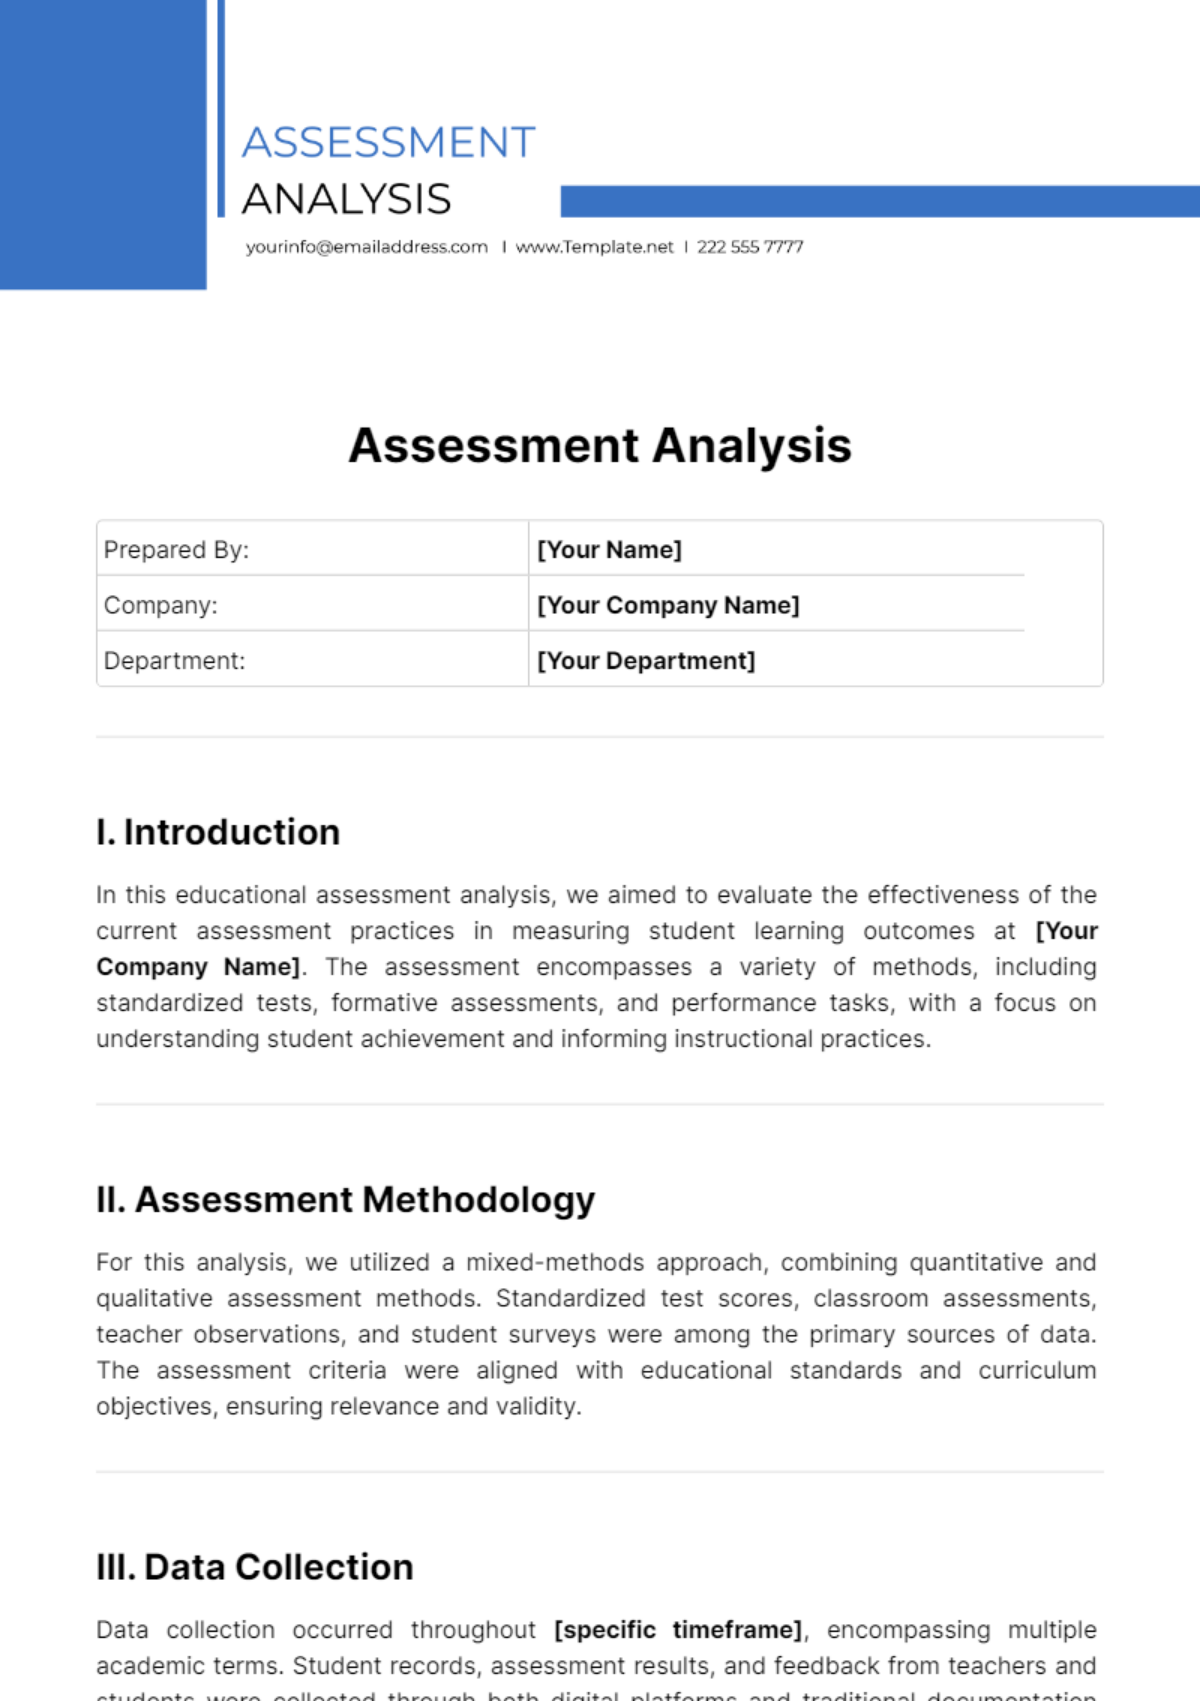 Assessment Analysis Template